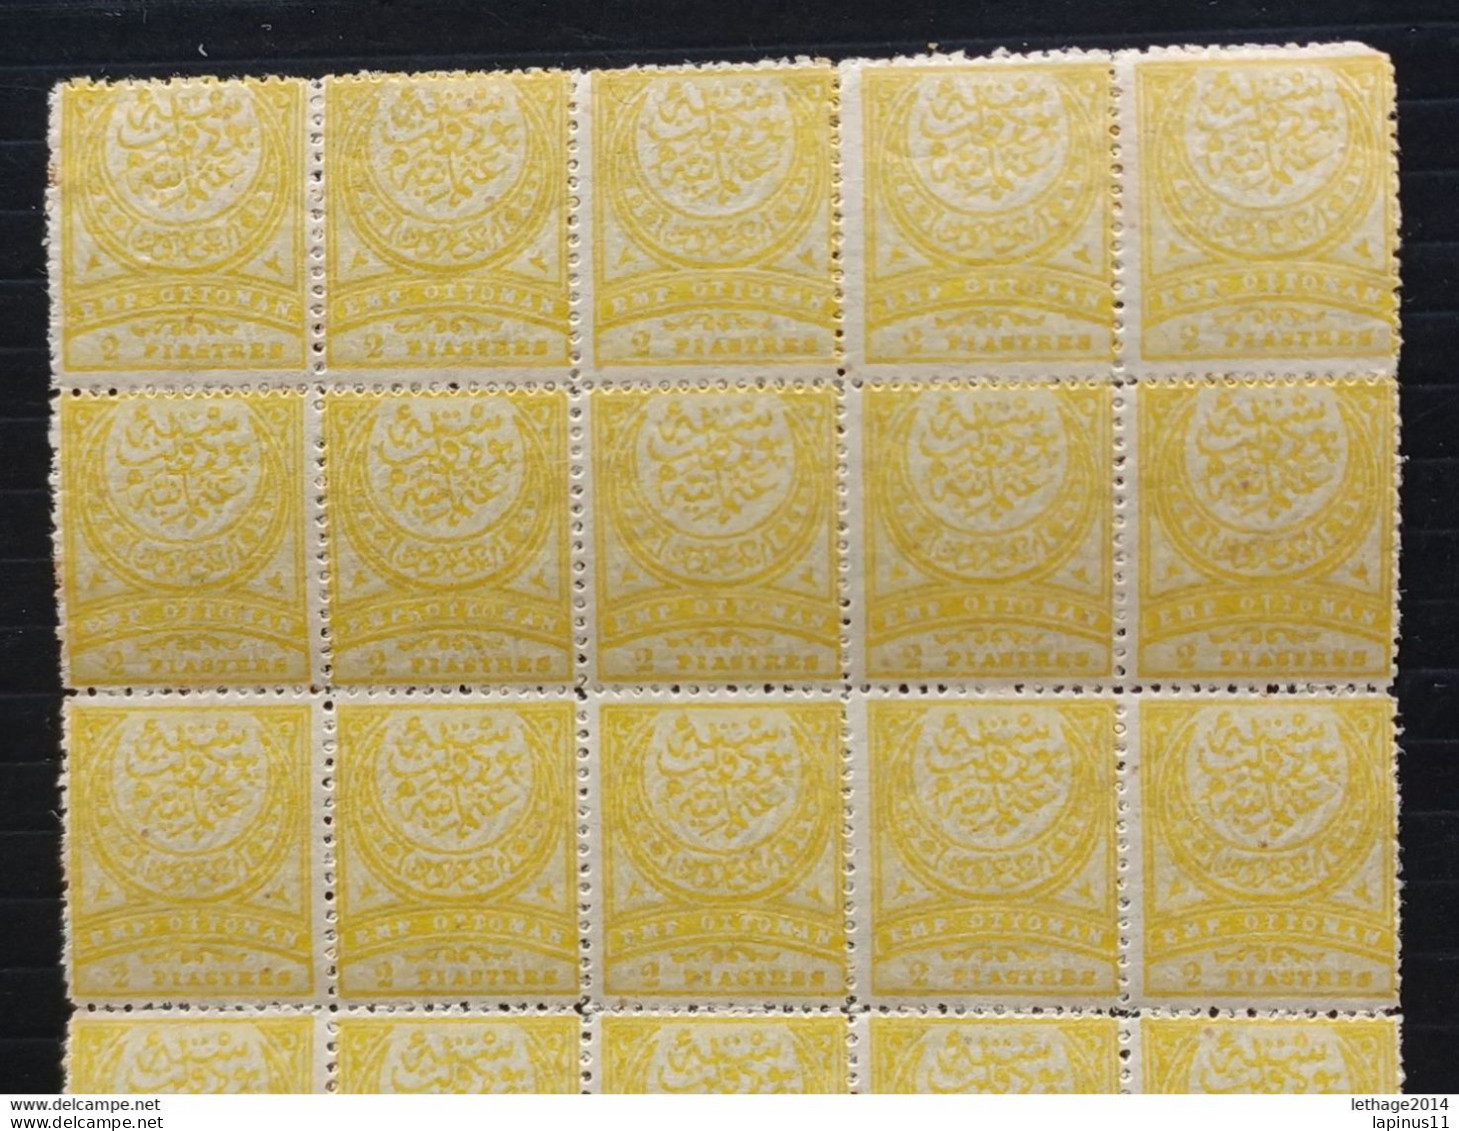 TURKEY OTTOMAN العثماني التركي Türkiye 1884 LEGEND EMP.OTTOMAN IN LATIN CHARACTERS CAT. UNIF.N. 58B RARE MNH - Unused Stamps